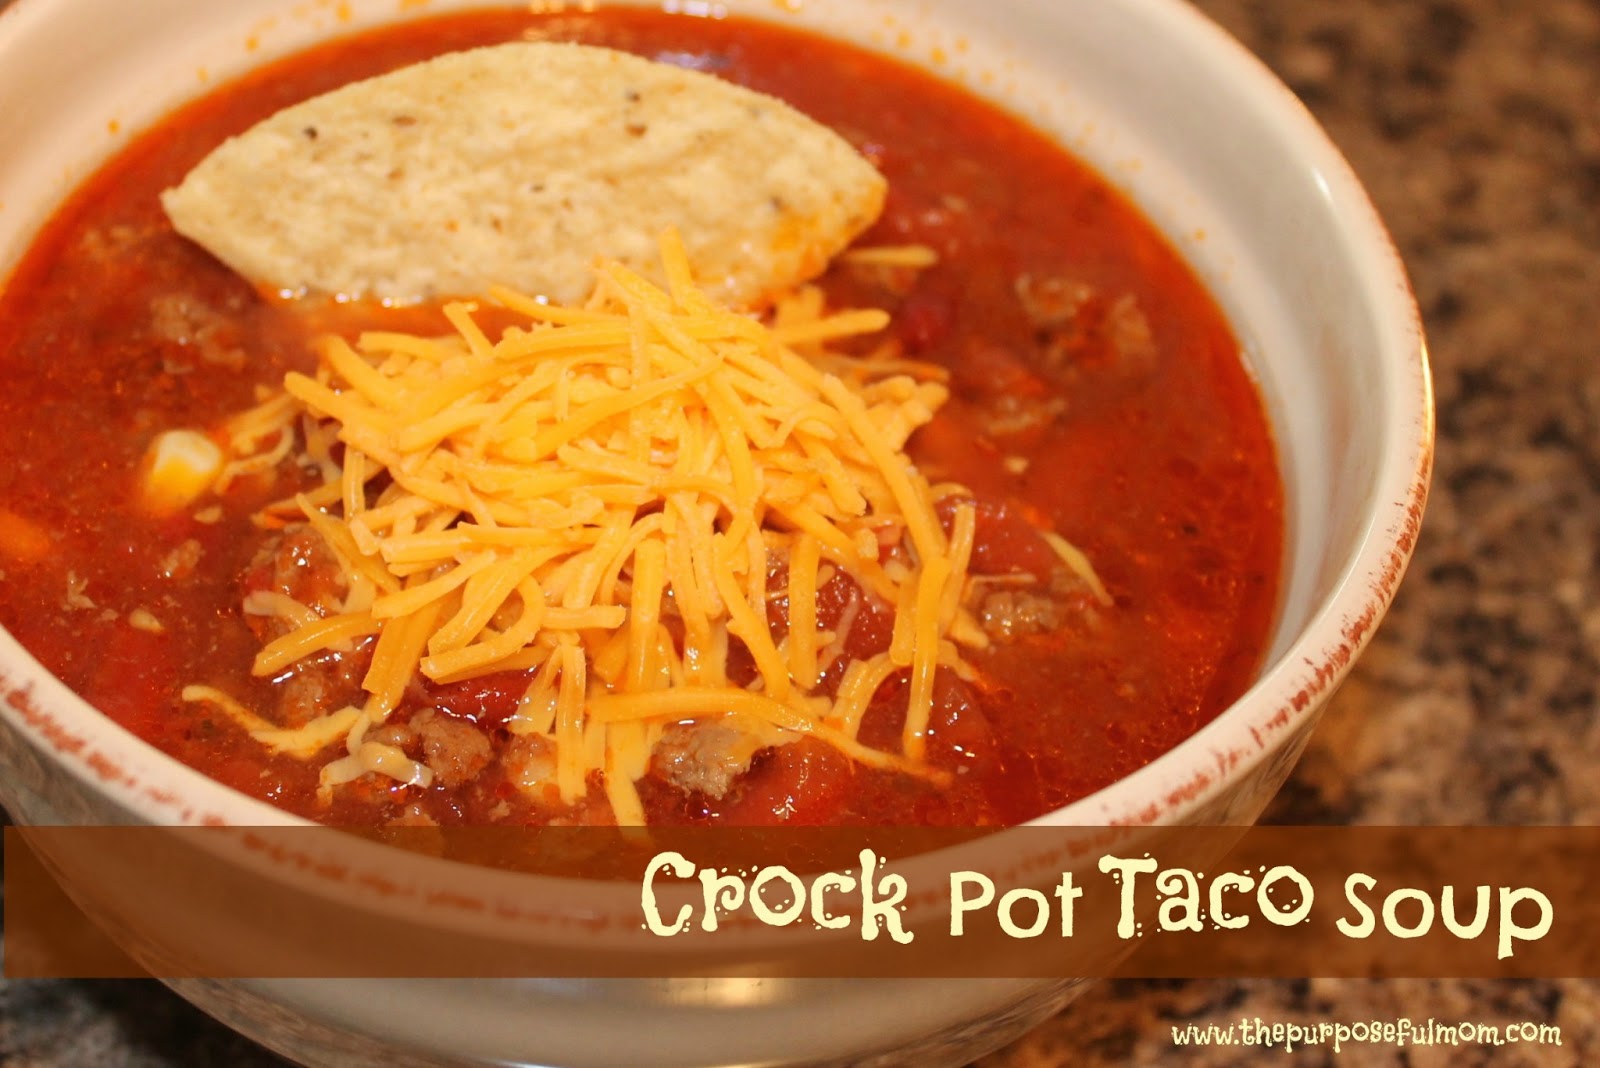 Crock-pot Taco Soup - A Frugal Recipe - The Purposeful Mom